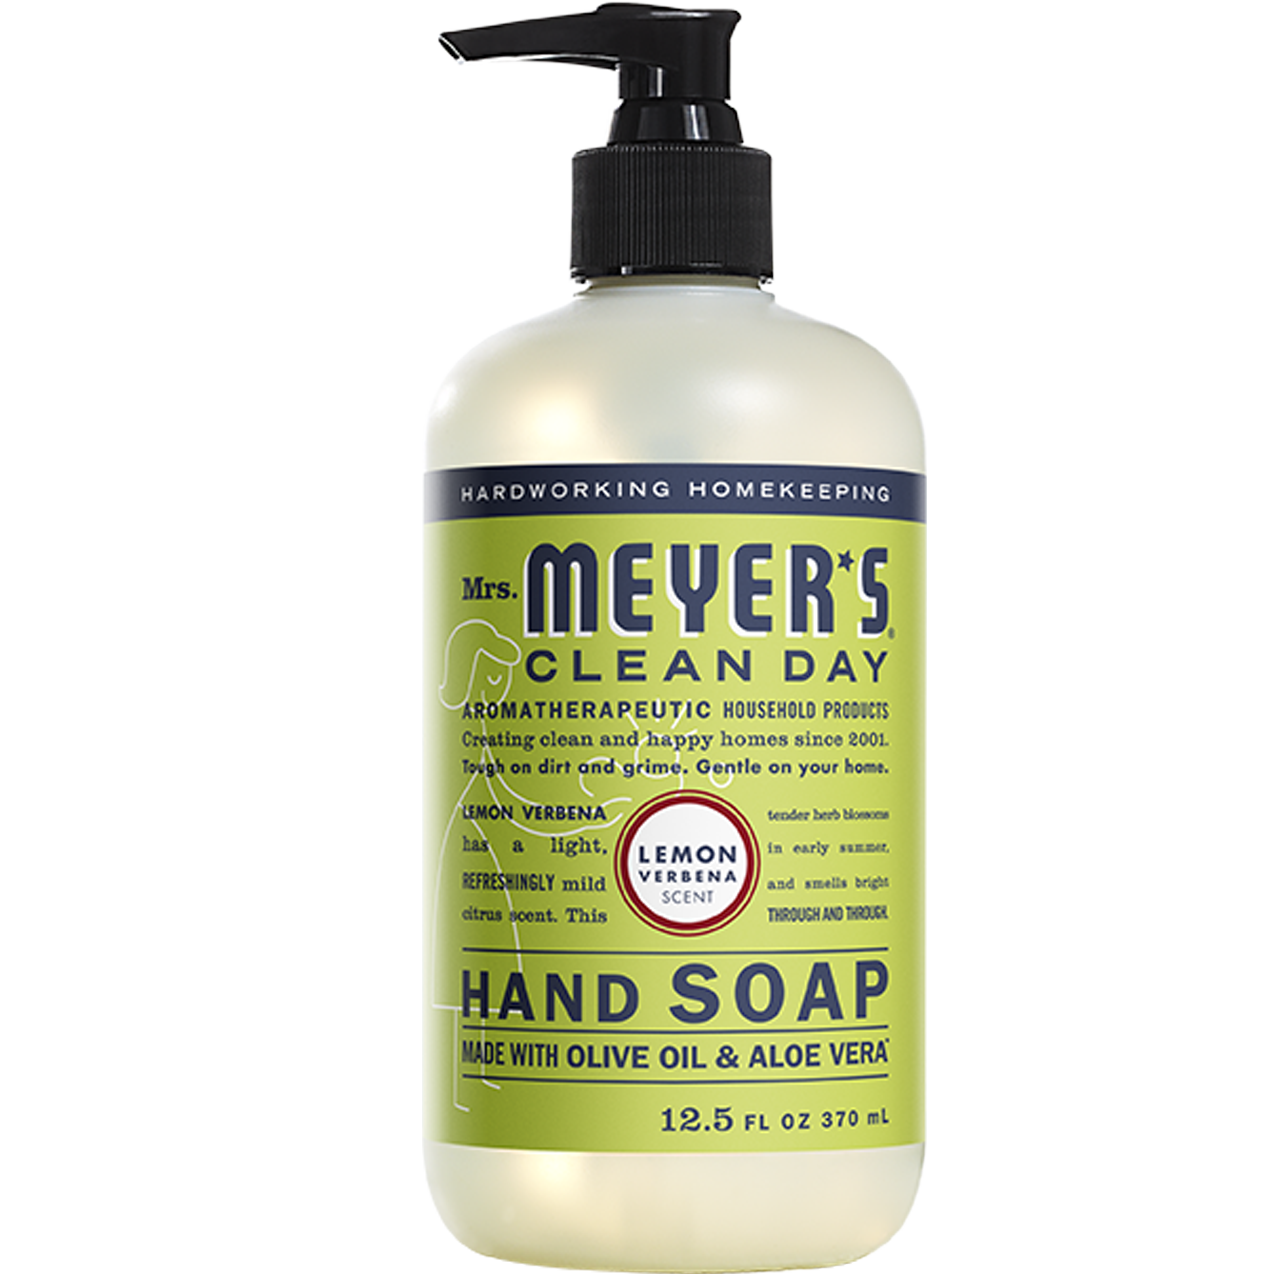 Lemon Verbena Hand Soap by Mrs. Meyer's 370ml